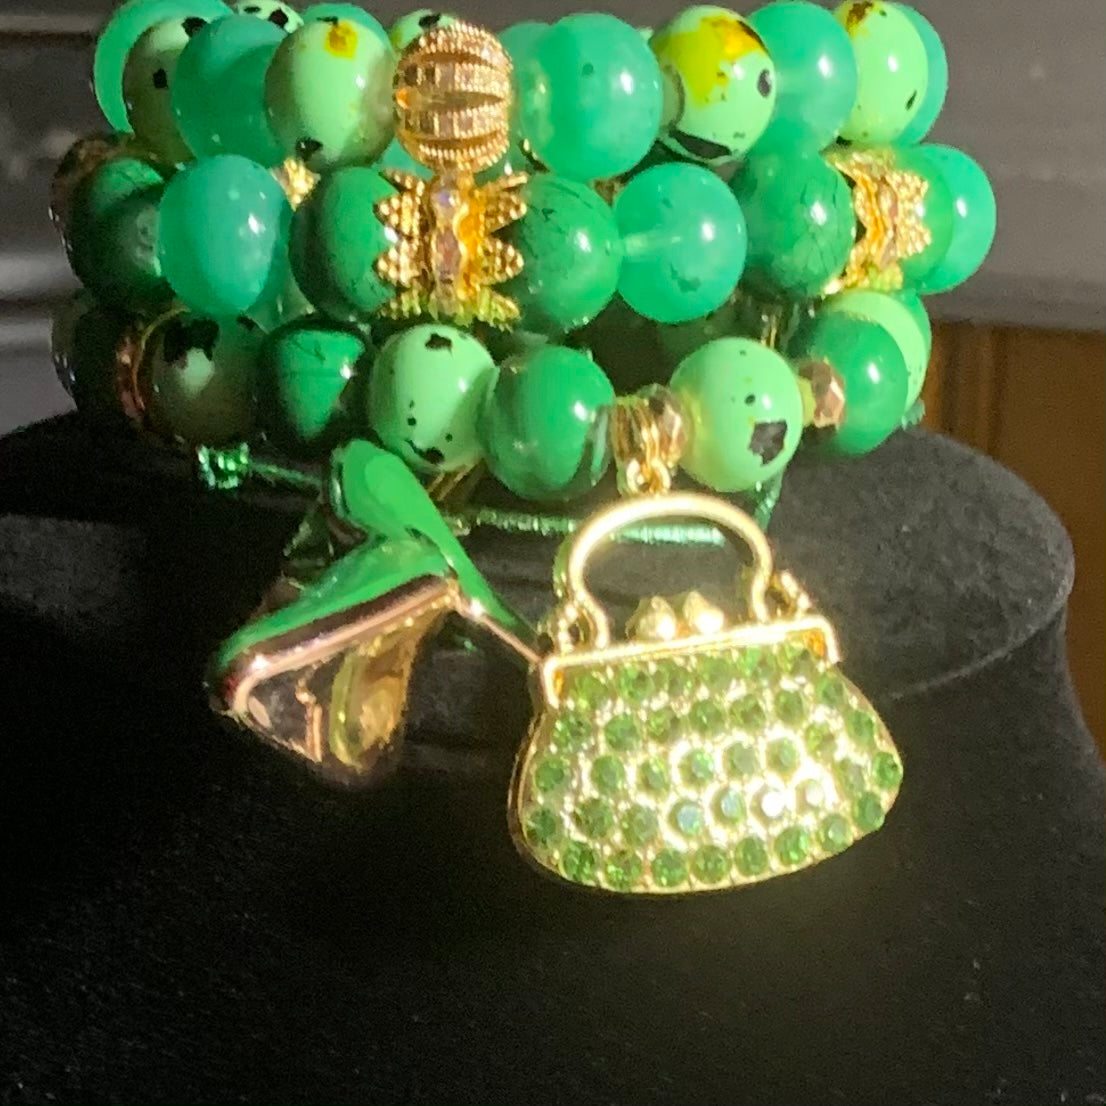 Mean green handmade jewelry set